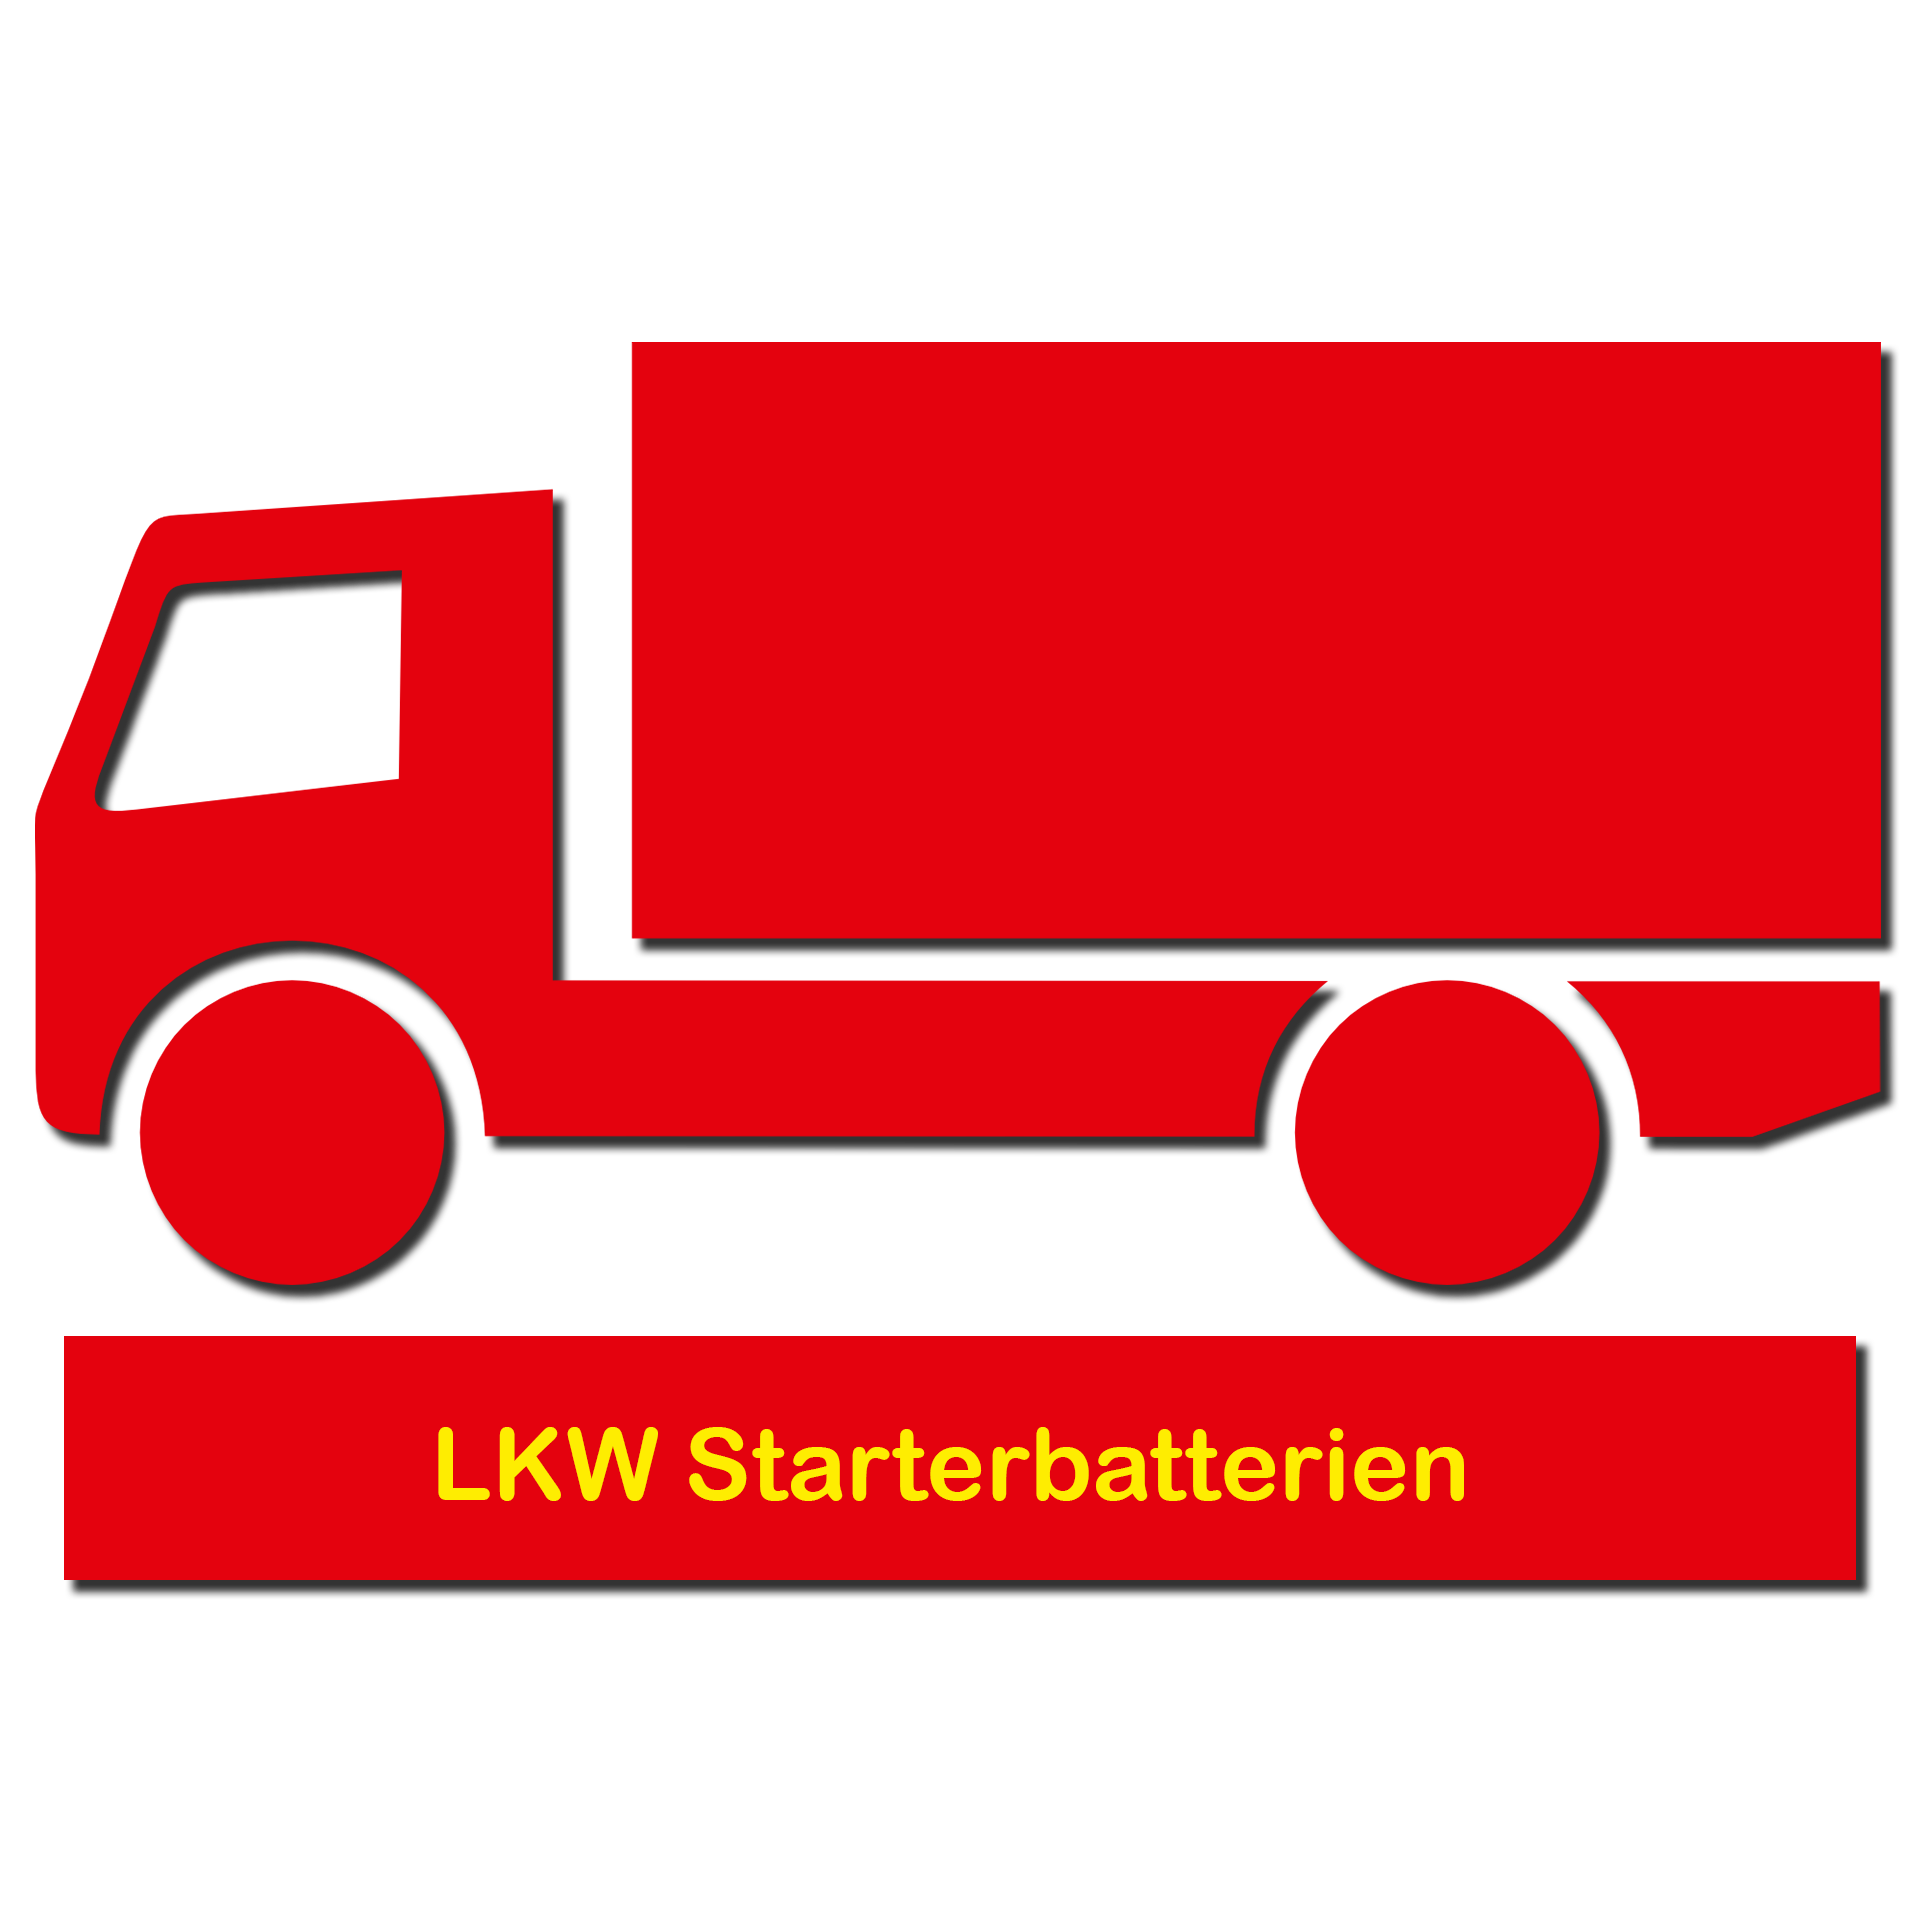 LKW Starterbatterien